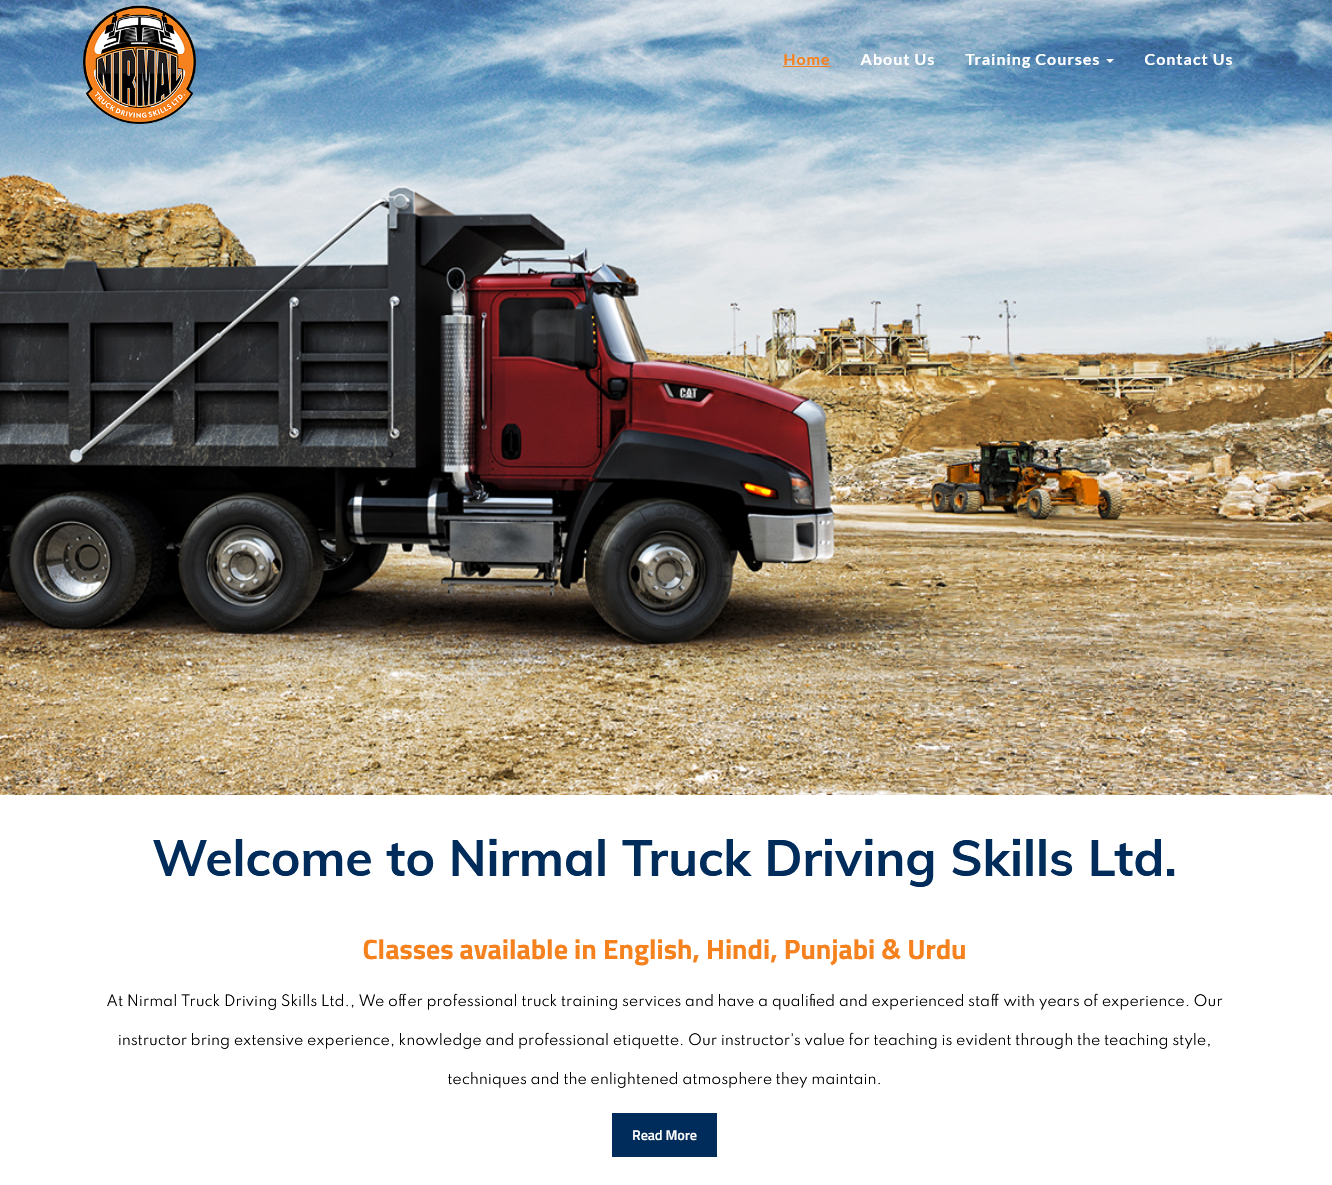 Nirmal Truck Driving